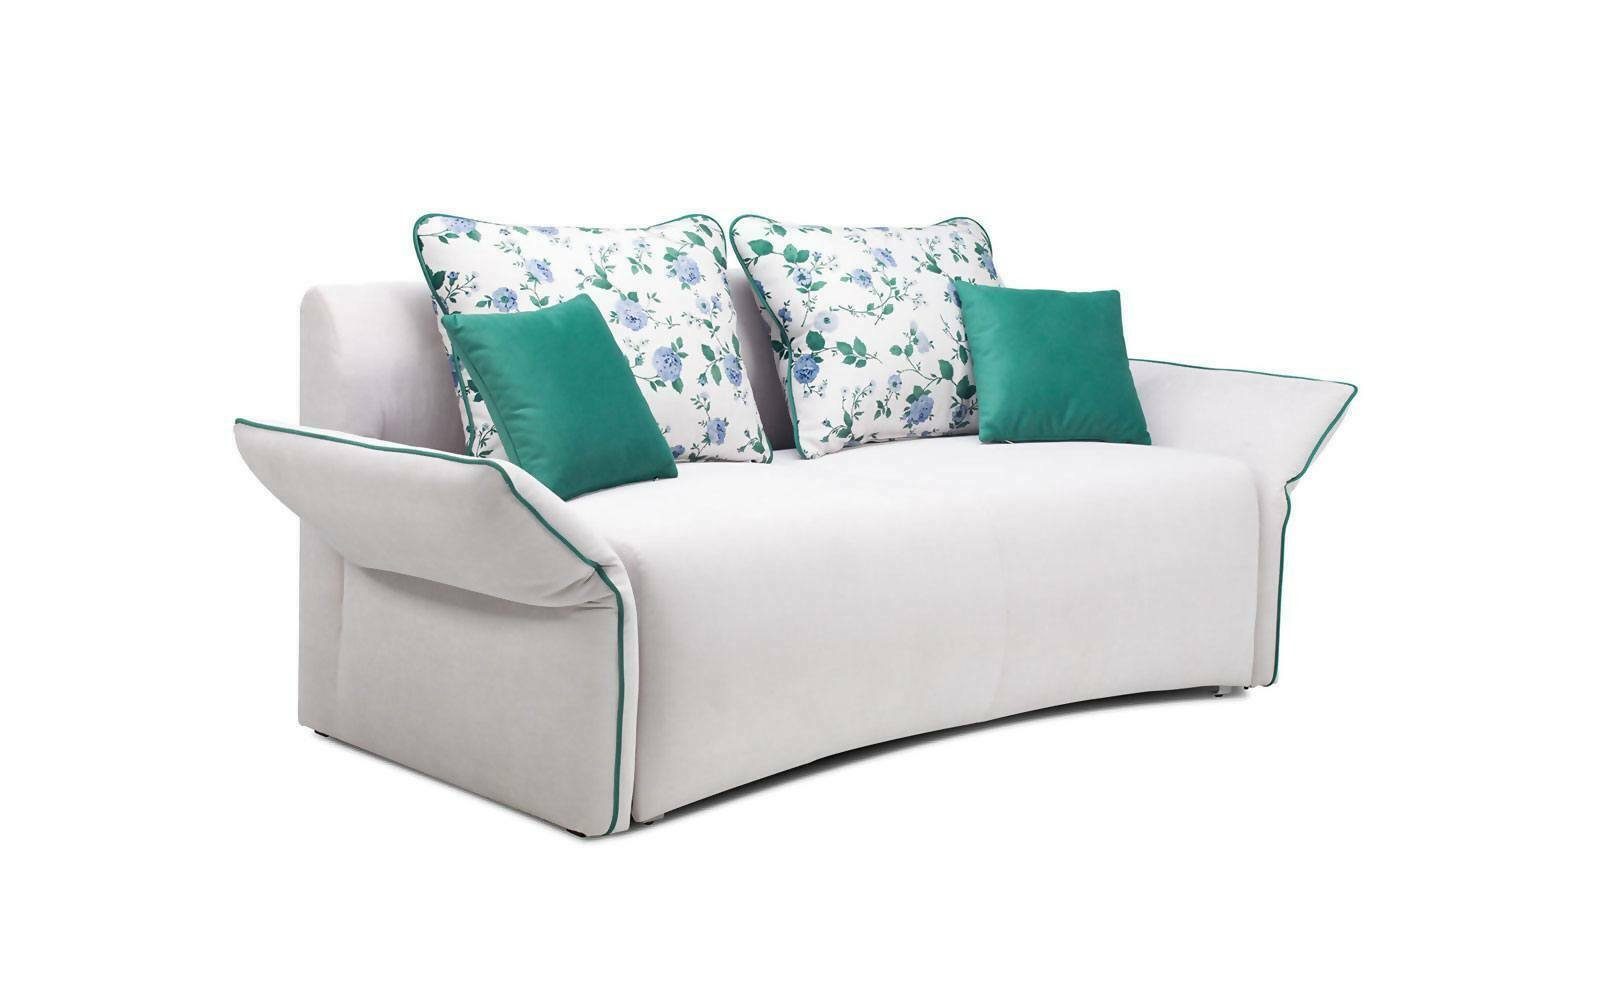 JVmoebel Sofa 3 Sitzer Couch Polster Sitz Funktion Bettfunktion Schlaf Couchen, Made in Europe